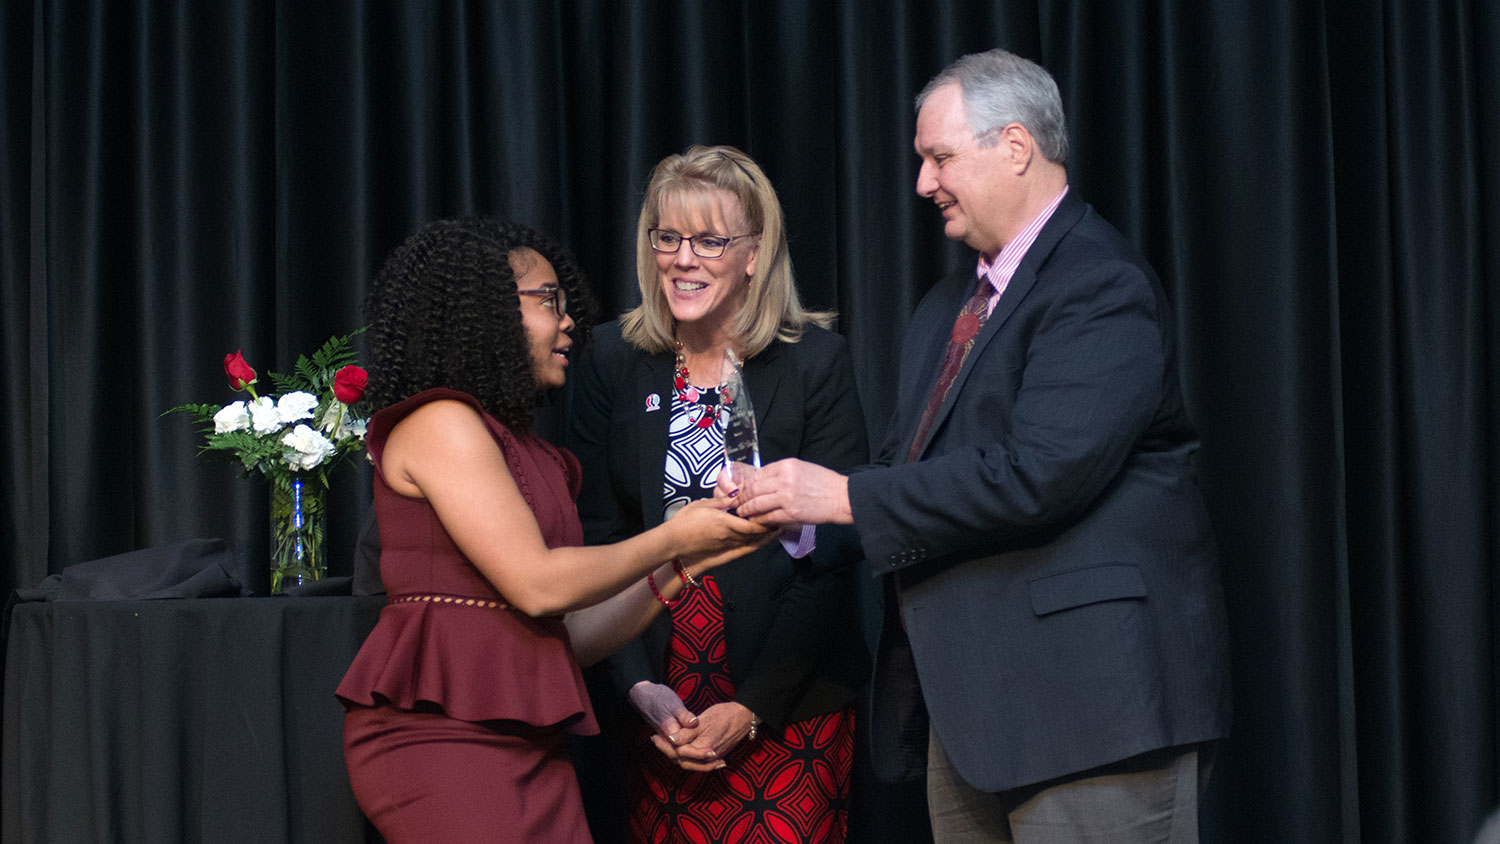 Bri Elum honored at 2019 Sisterhood Dinner with Equity for Women Award